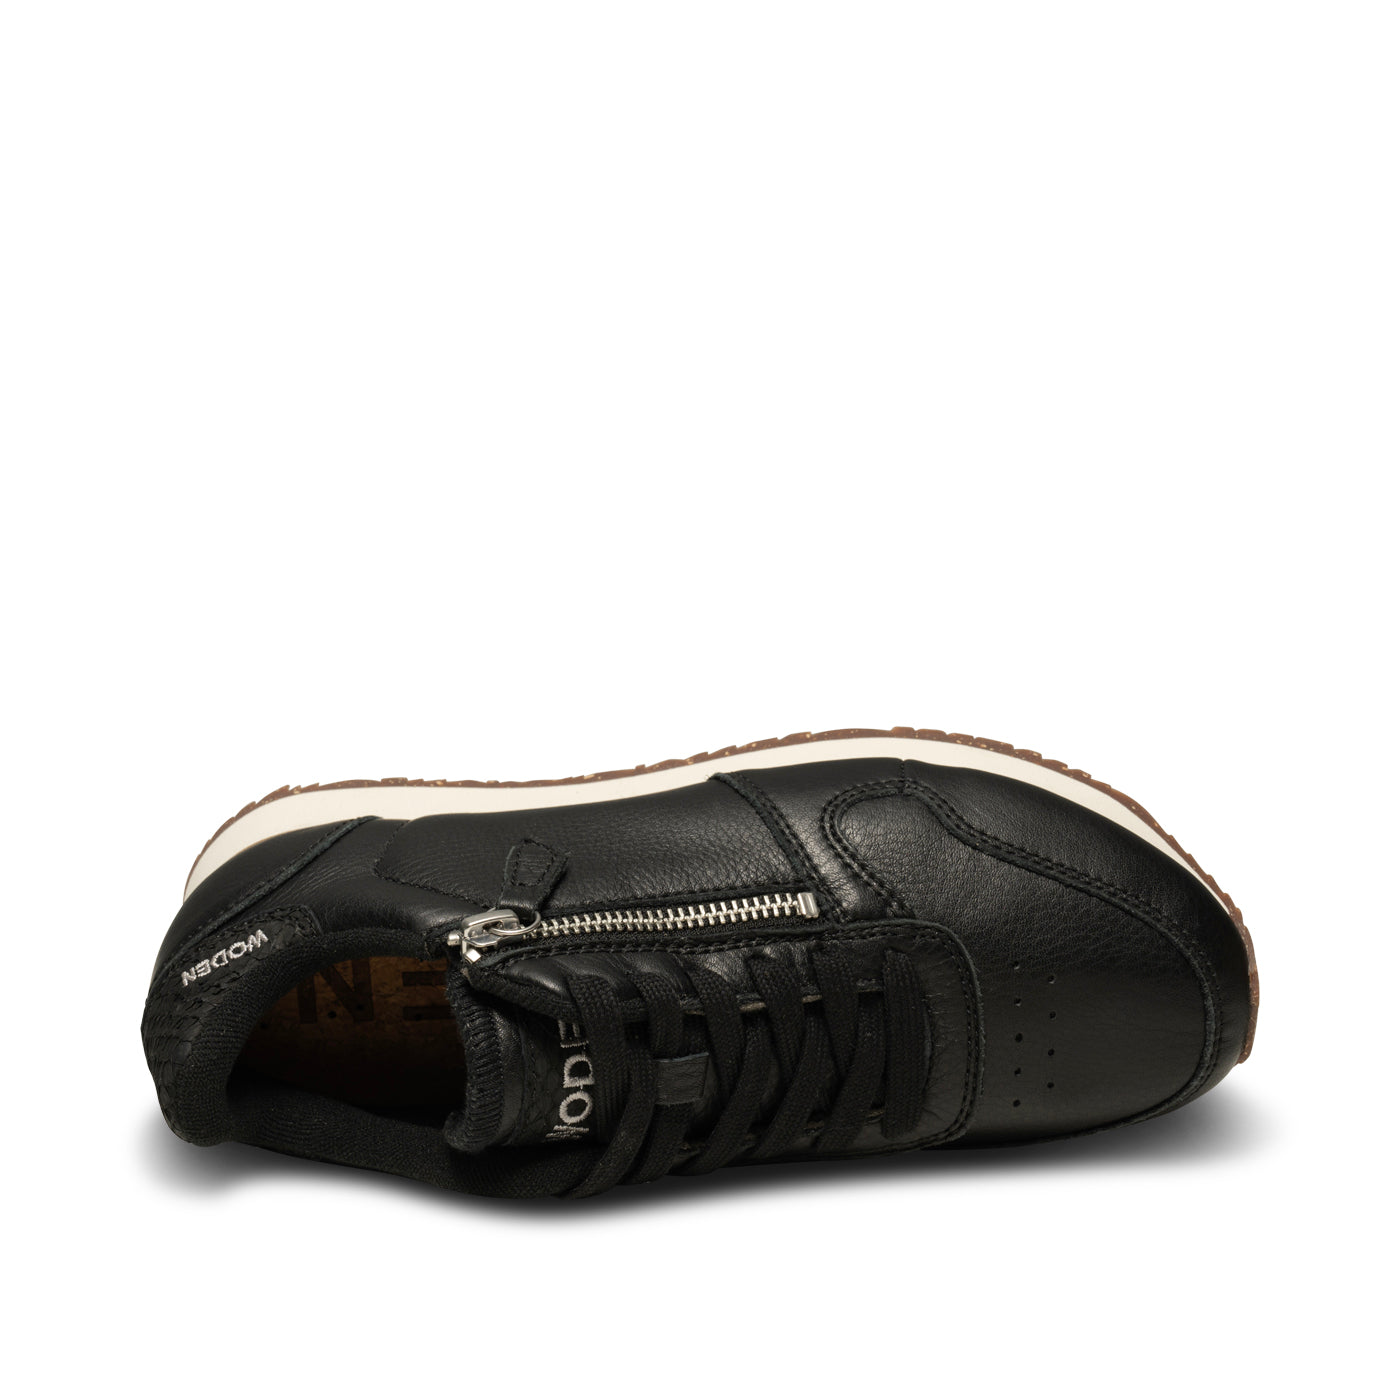 WODEN Ydun Leather Zipper Sneakers 020 Black